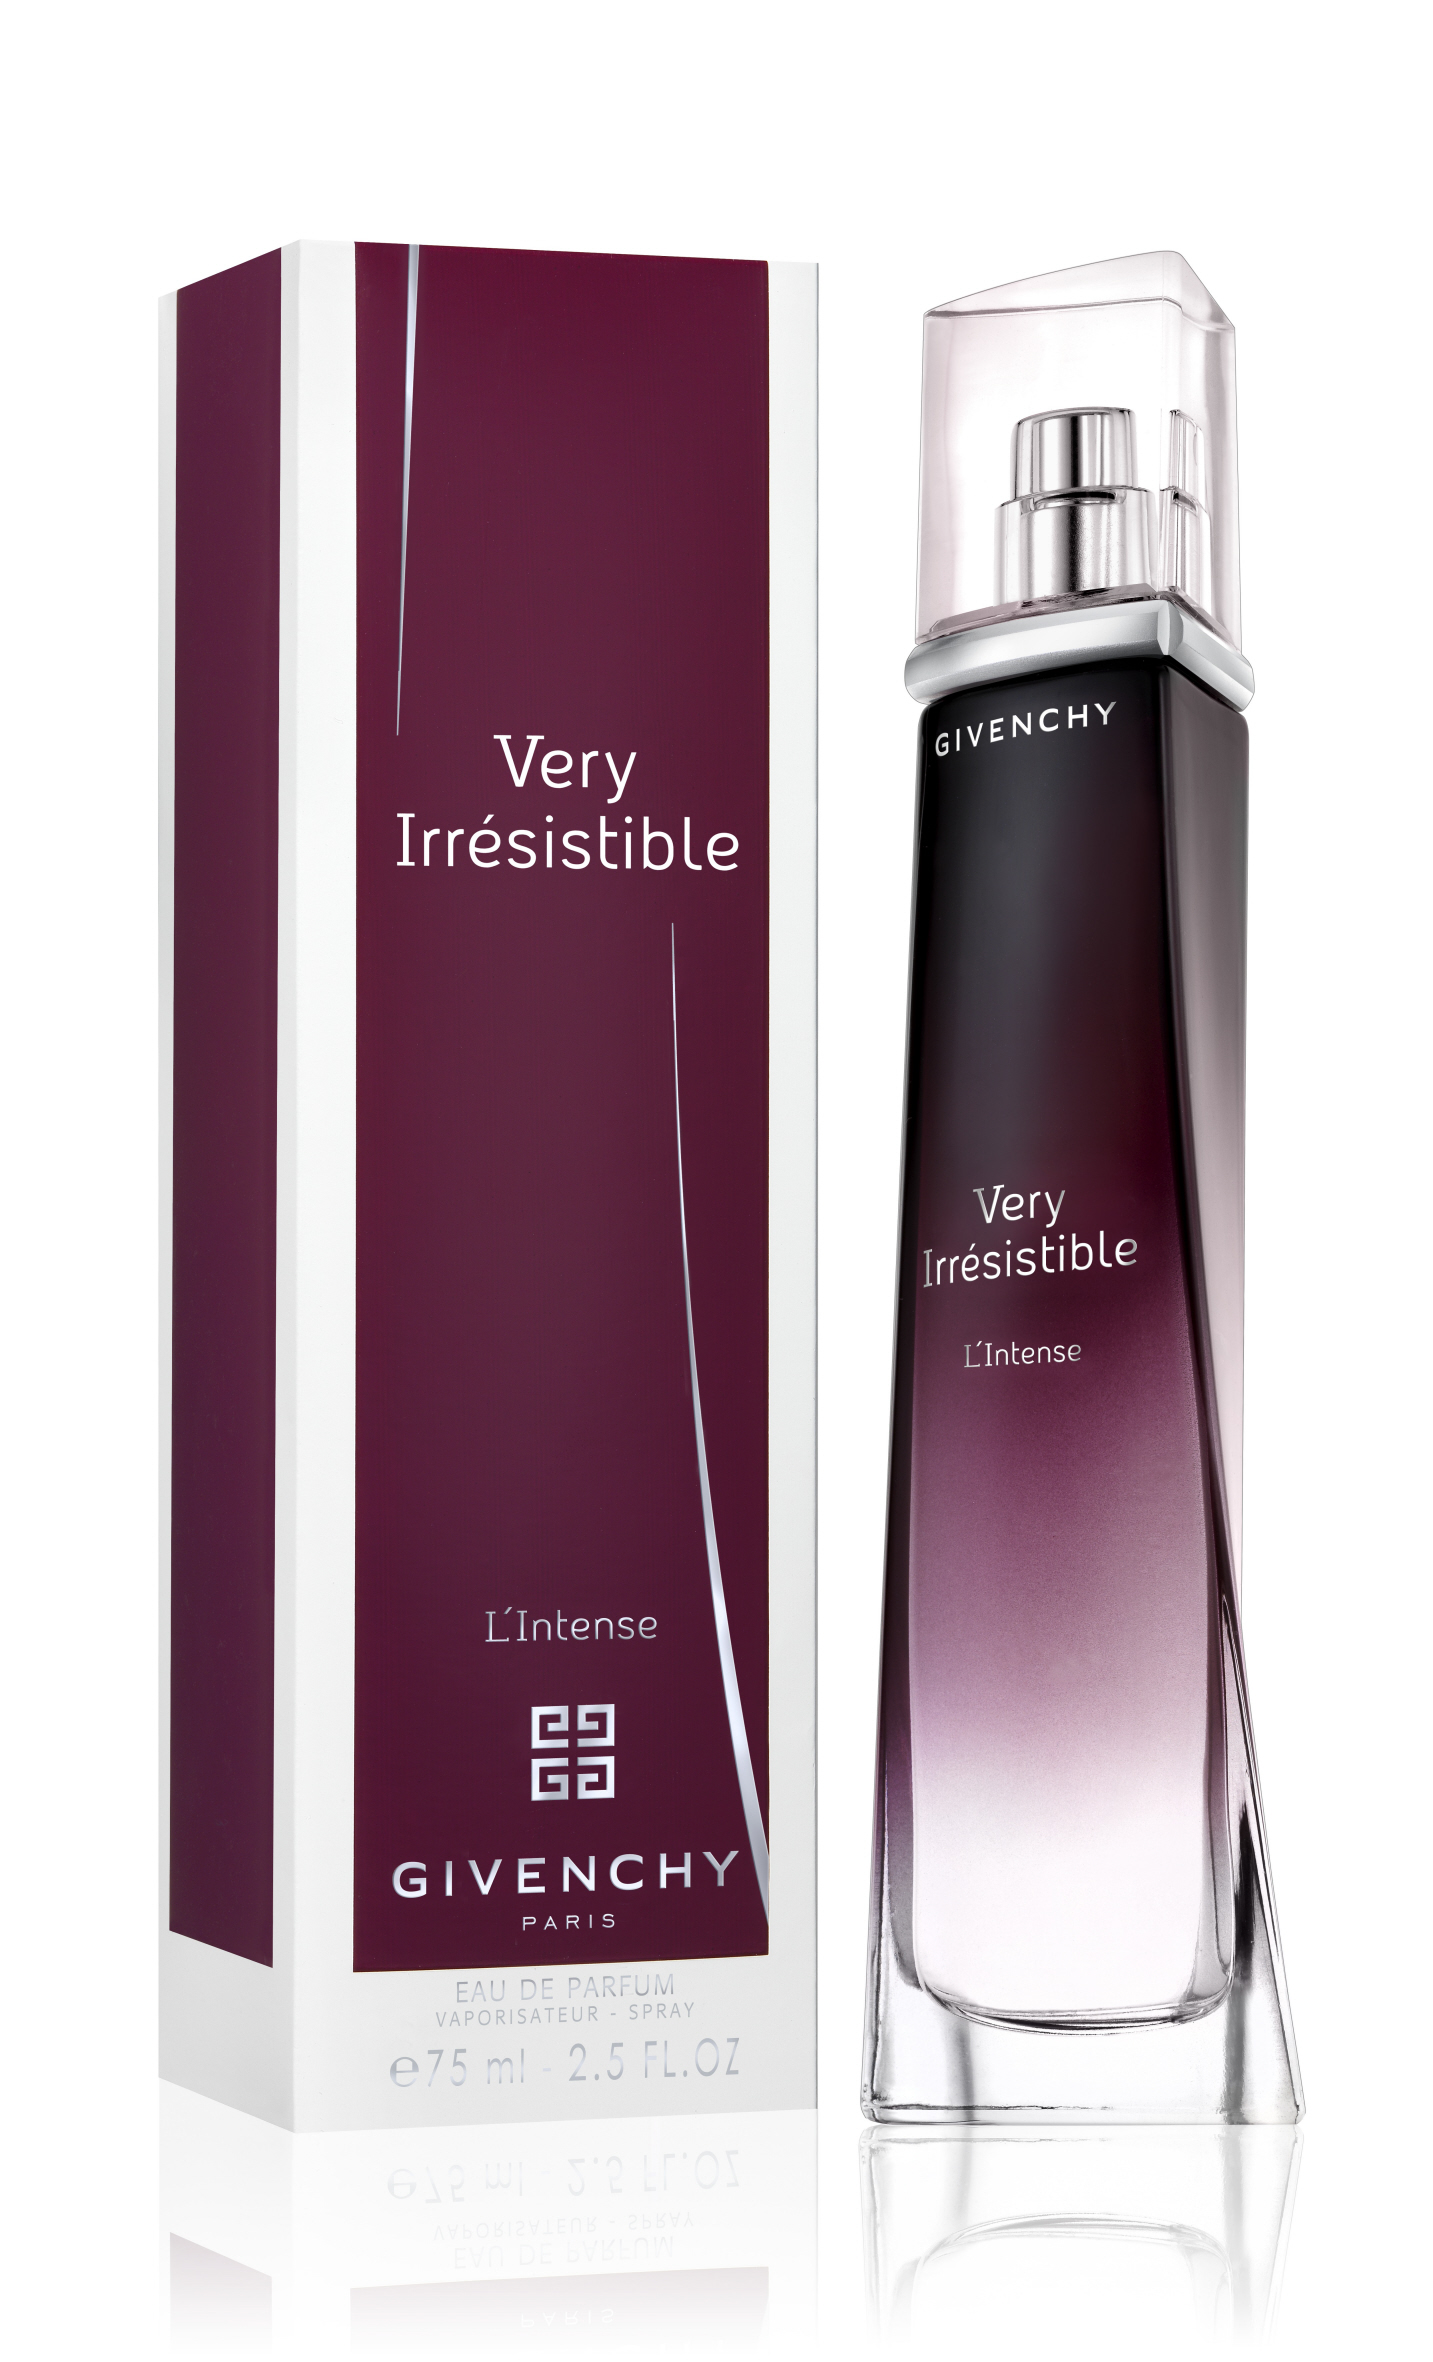 Very Irresistible Givenchy L’Intense Givenchy perfume - a ...